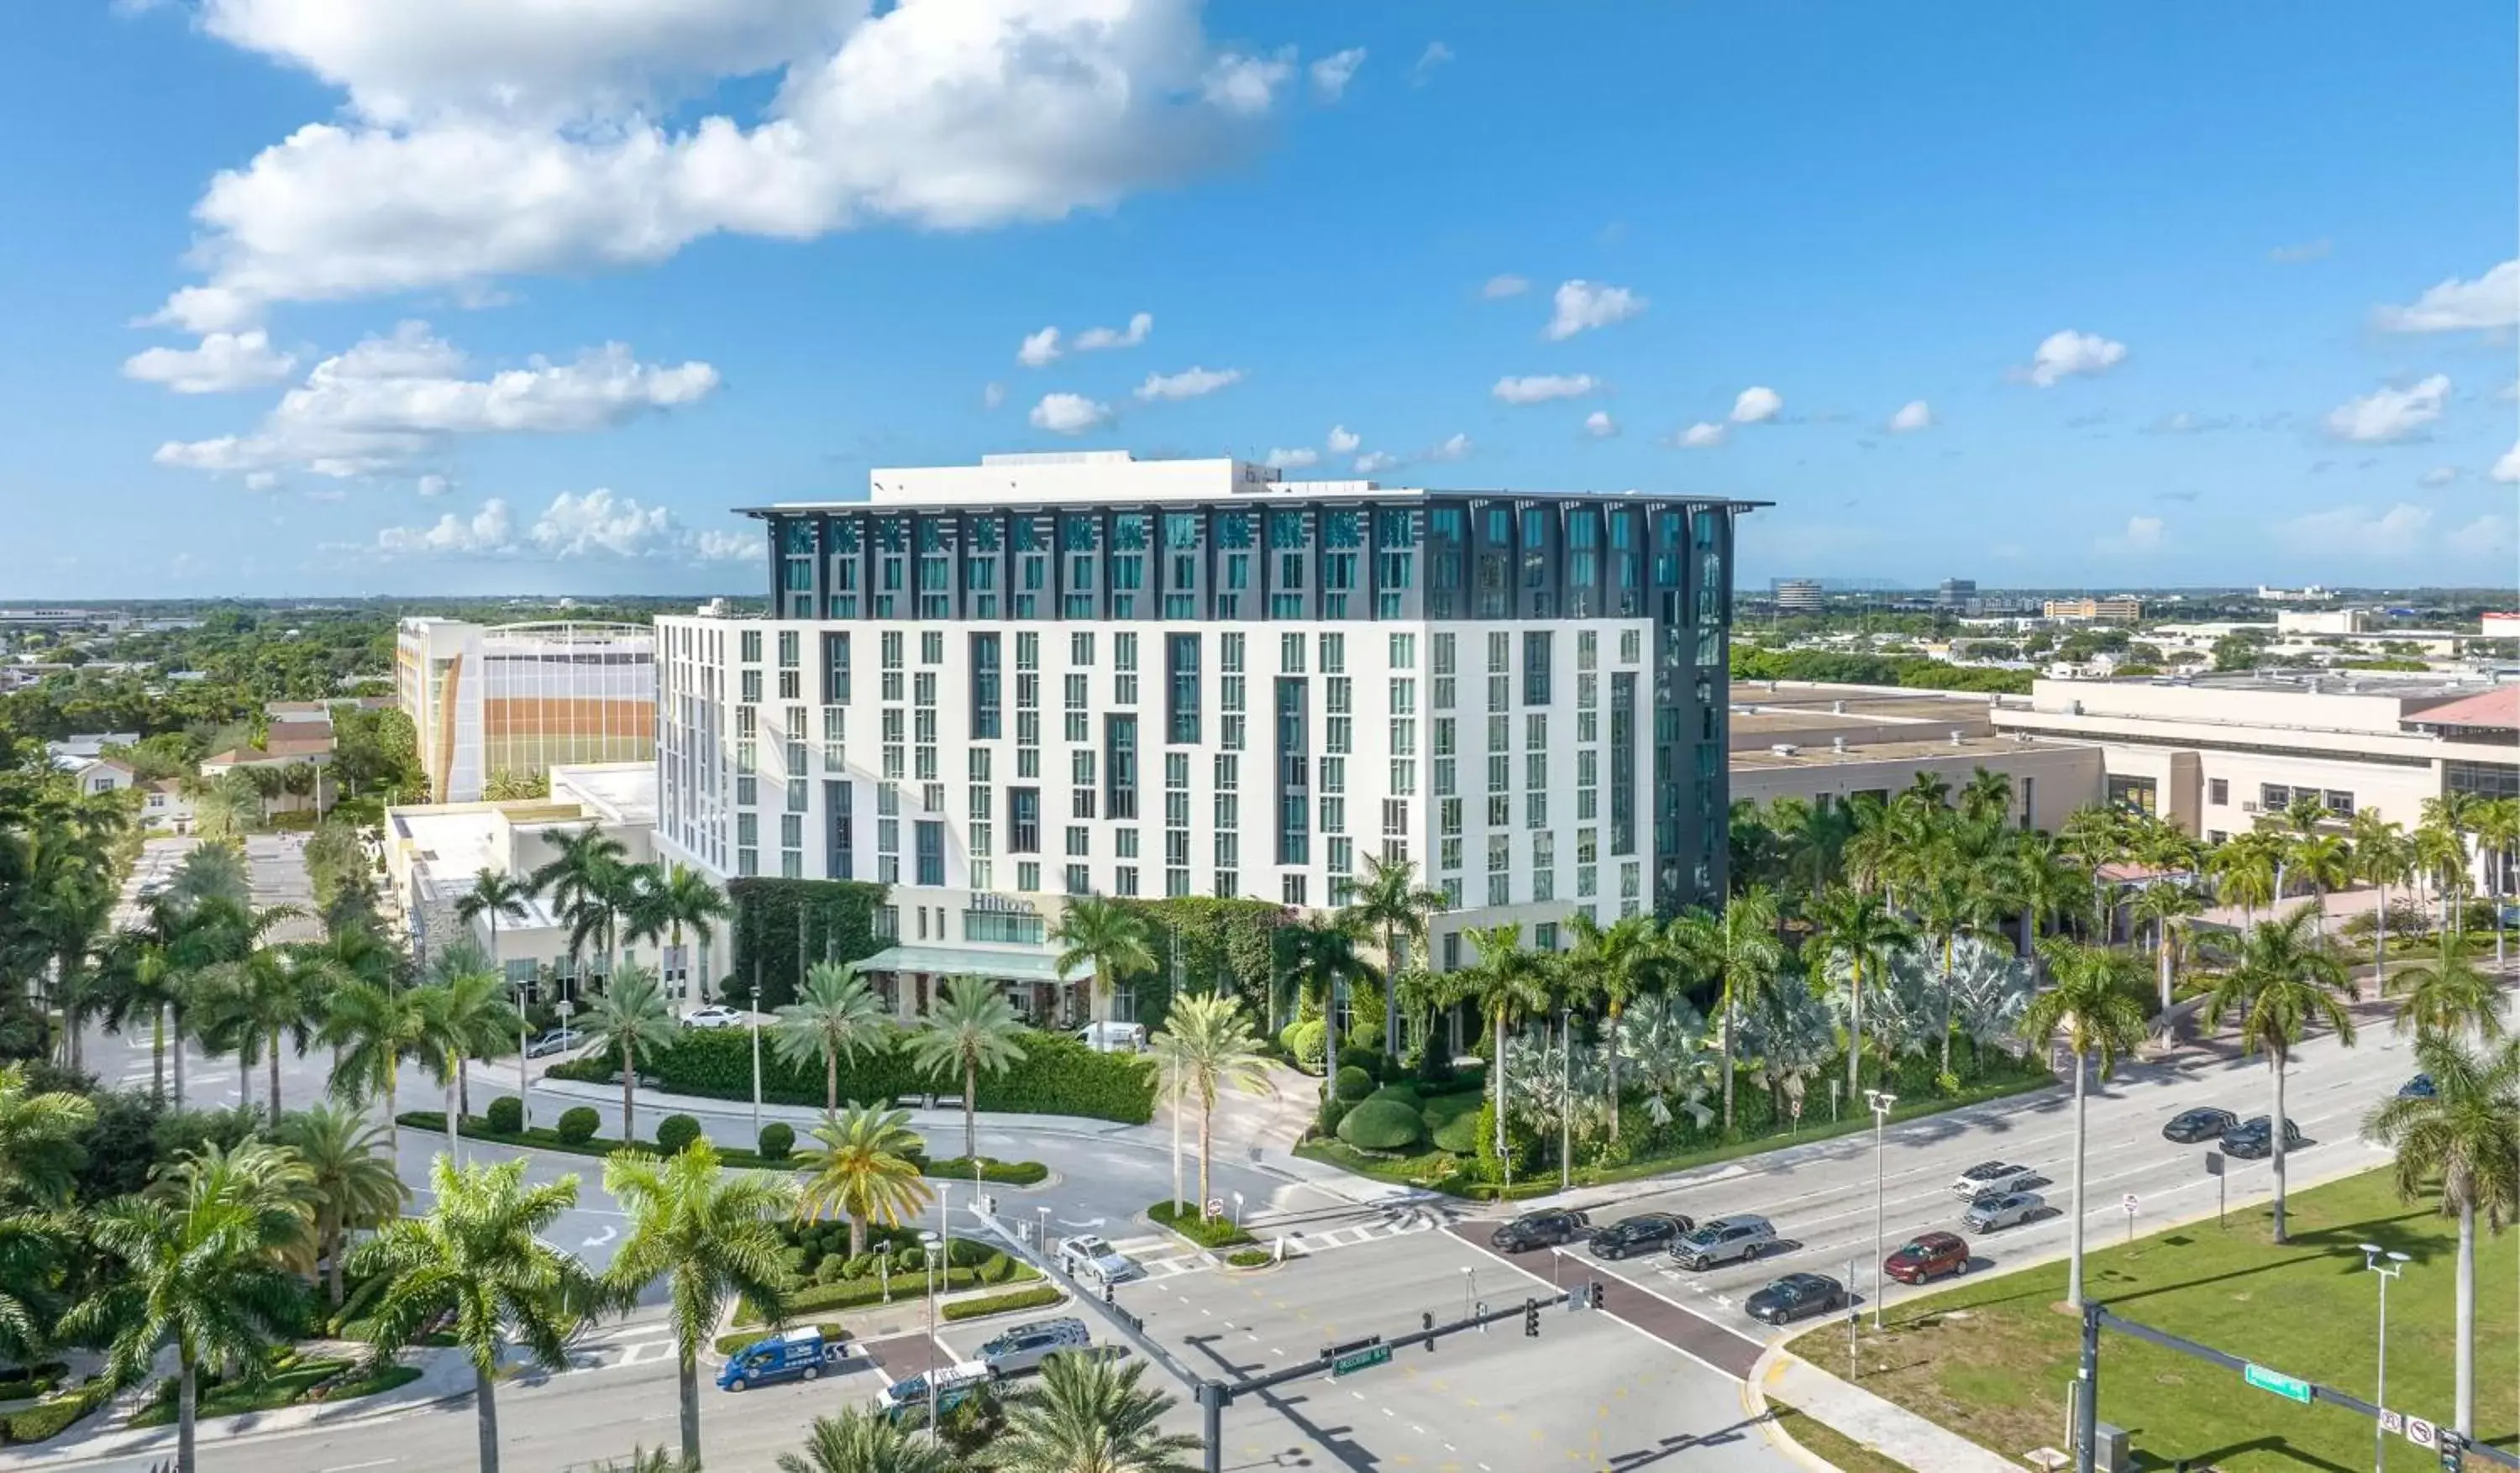 Property building, Bird's-eye View in Hilton West Palm Beach